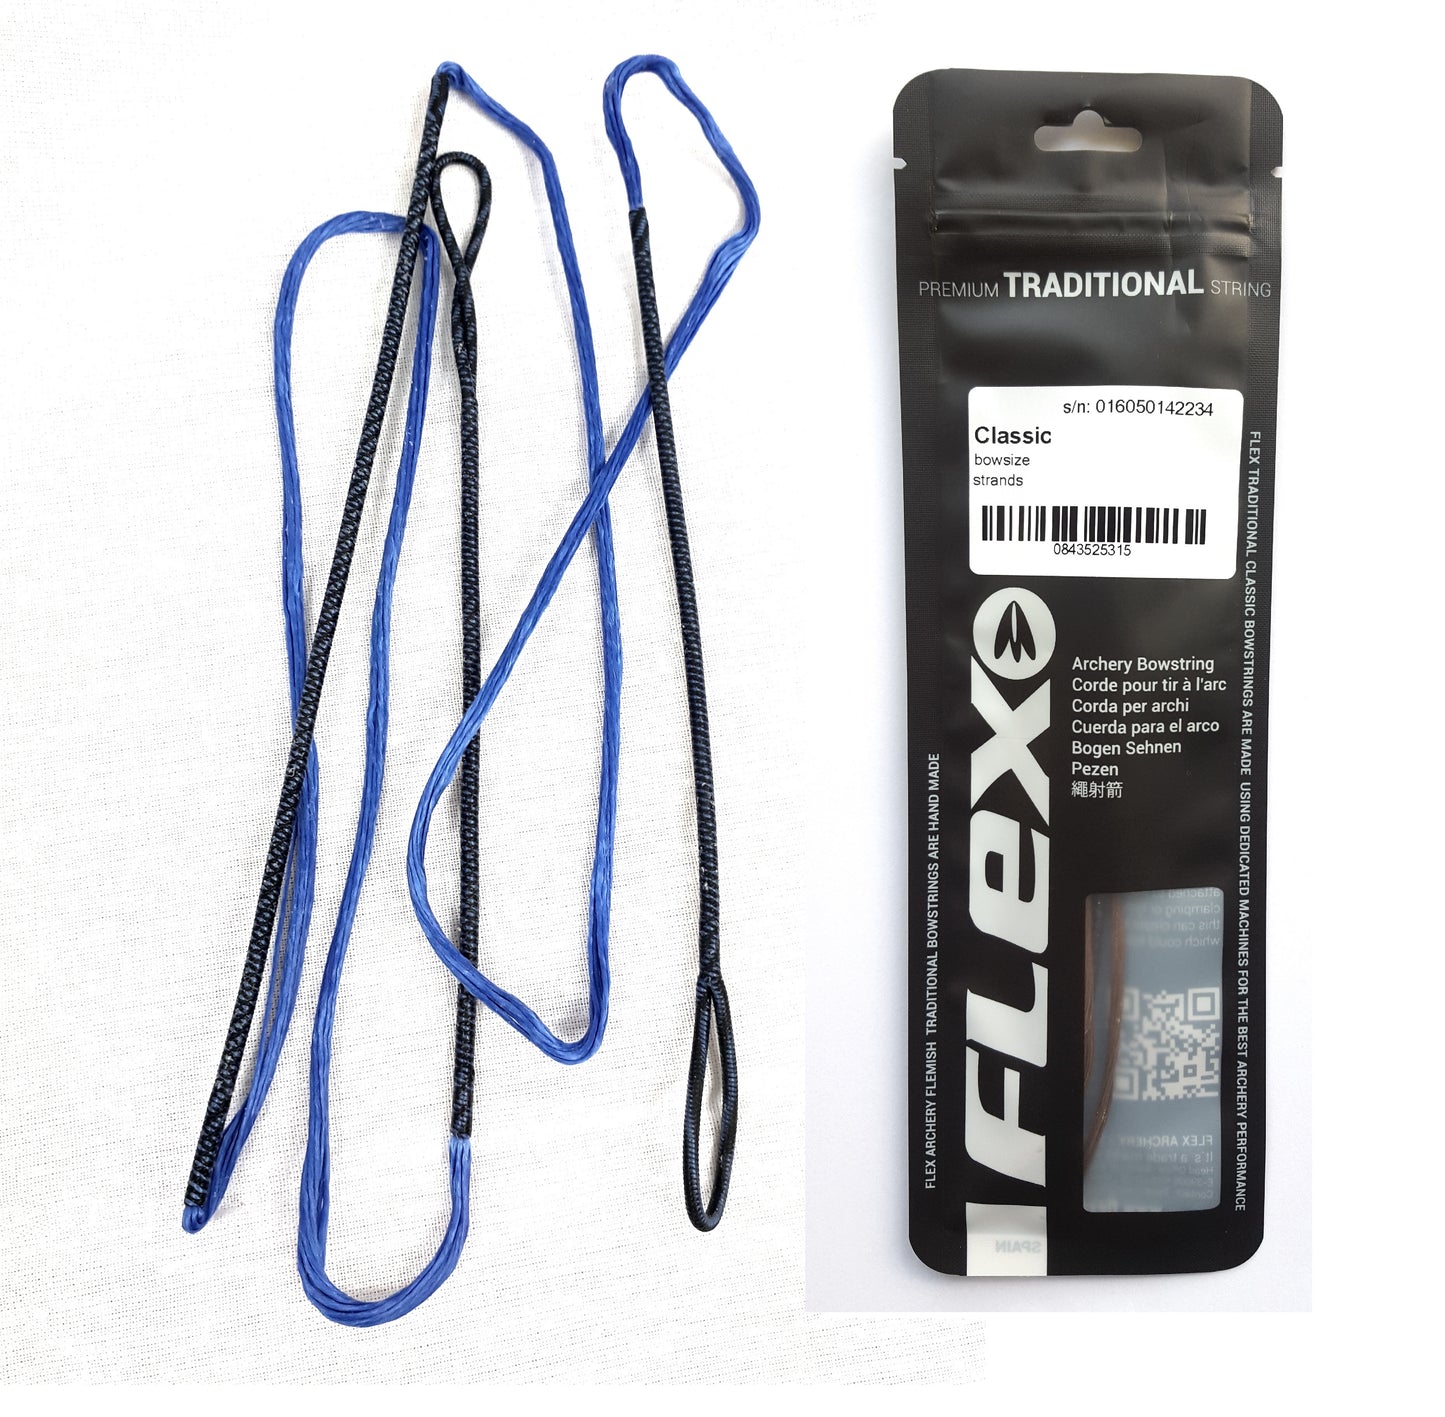 Corda Dacron Stringflex blu per archi ricurvi, 48-72 pollici in 10-12 fili